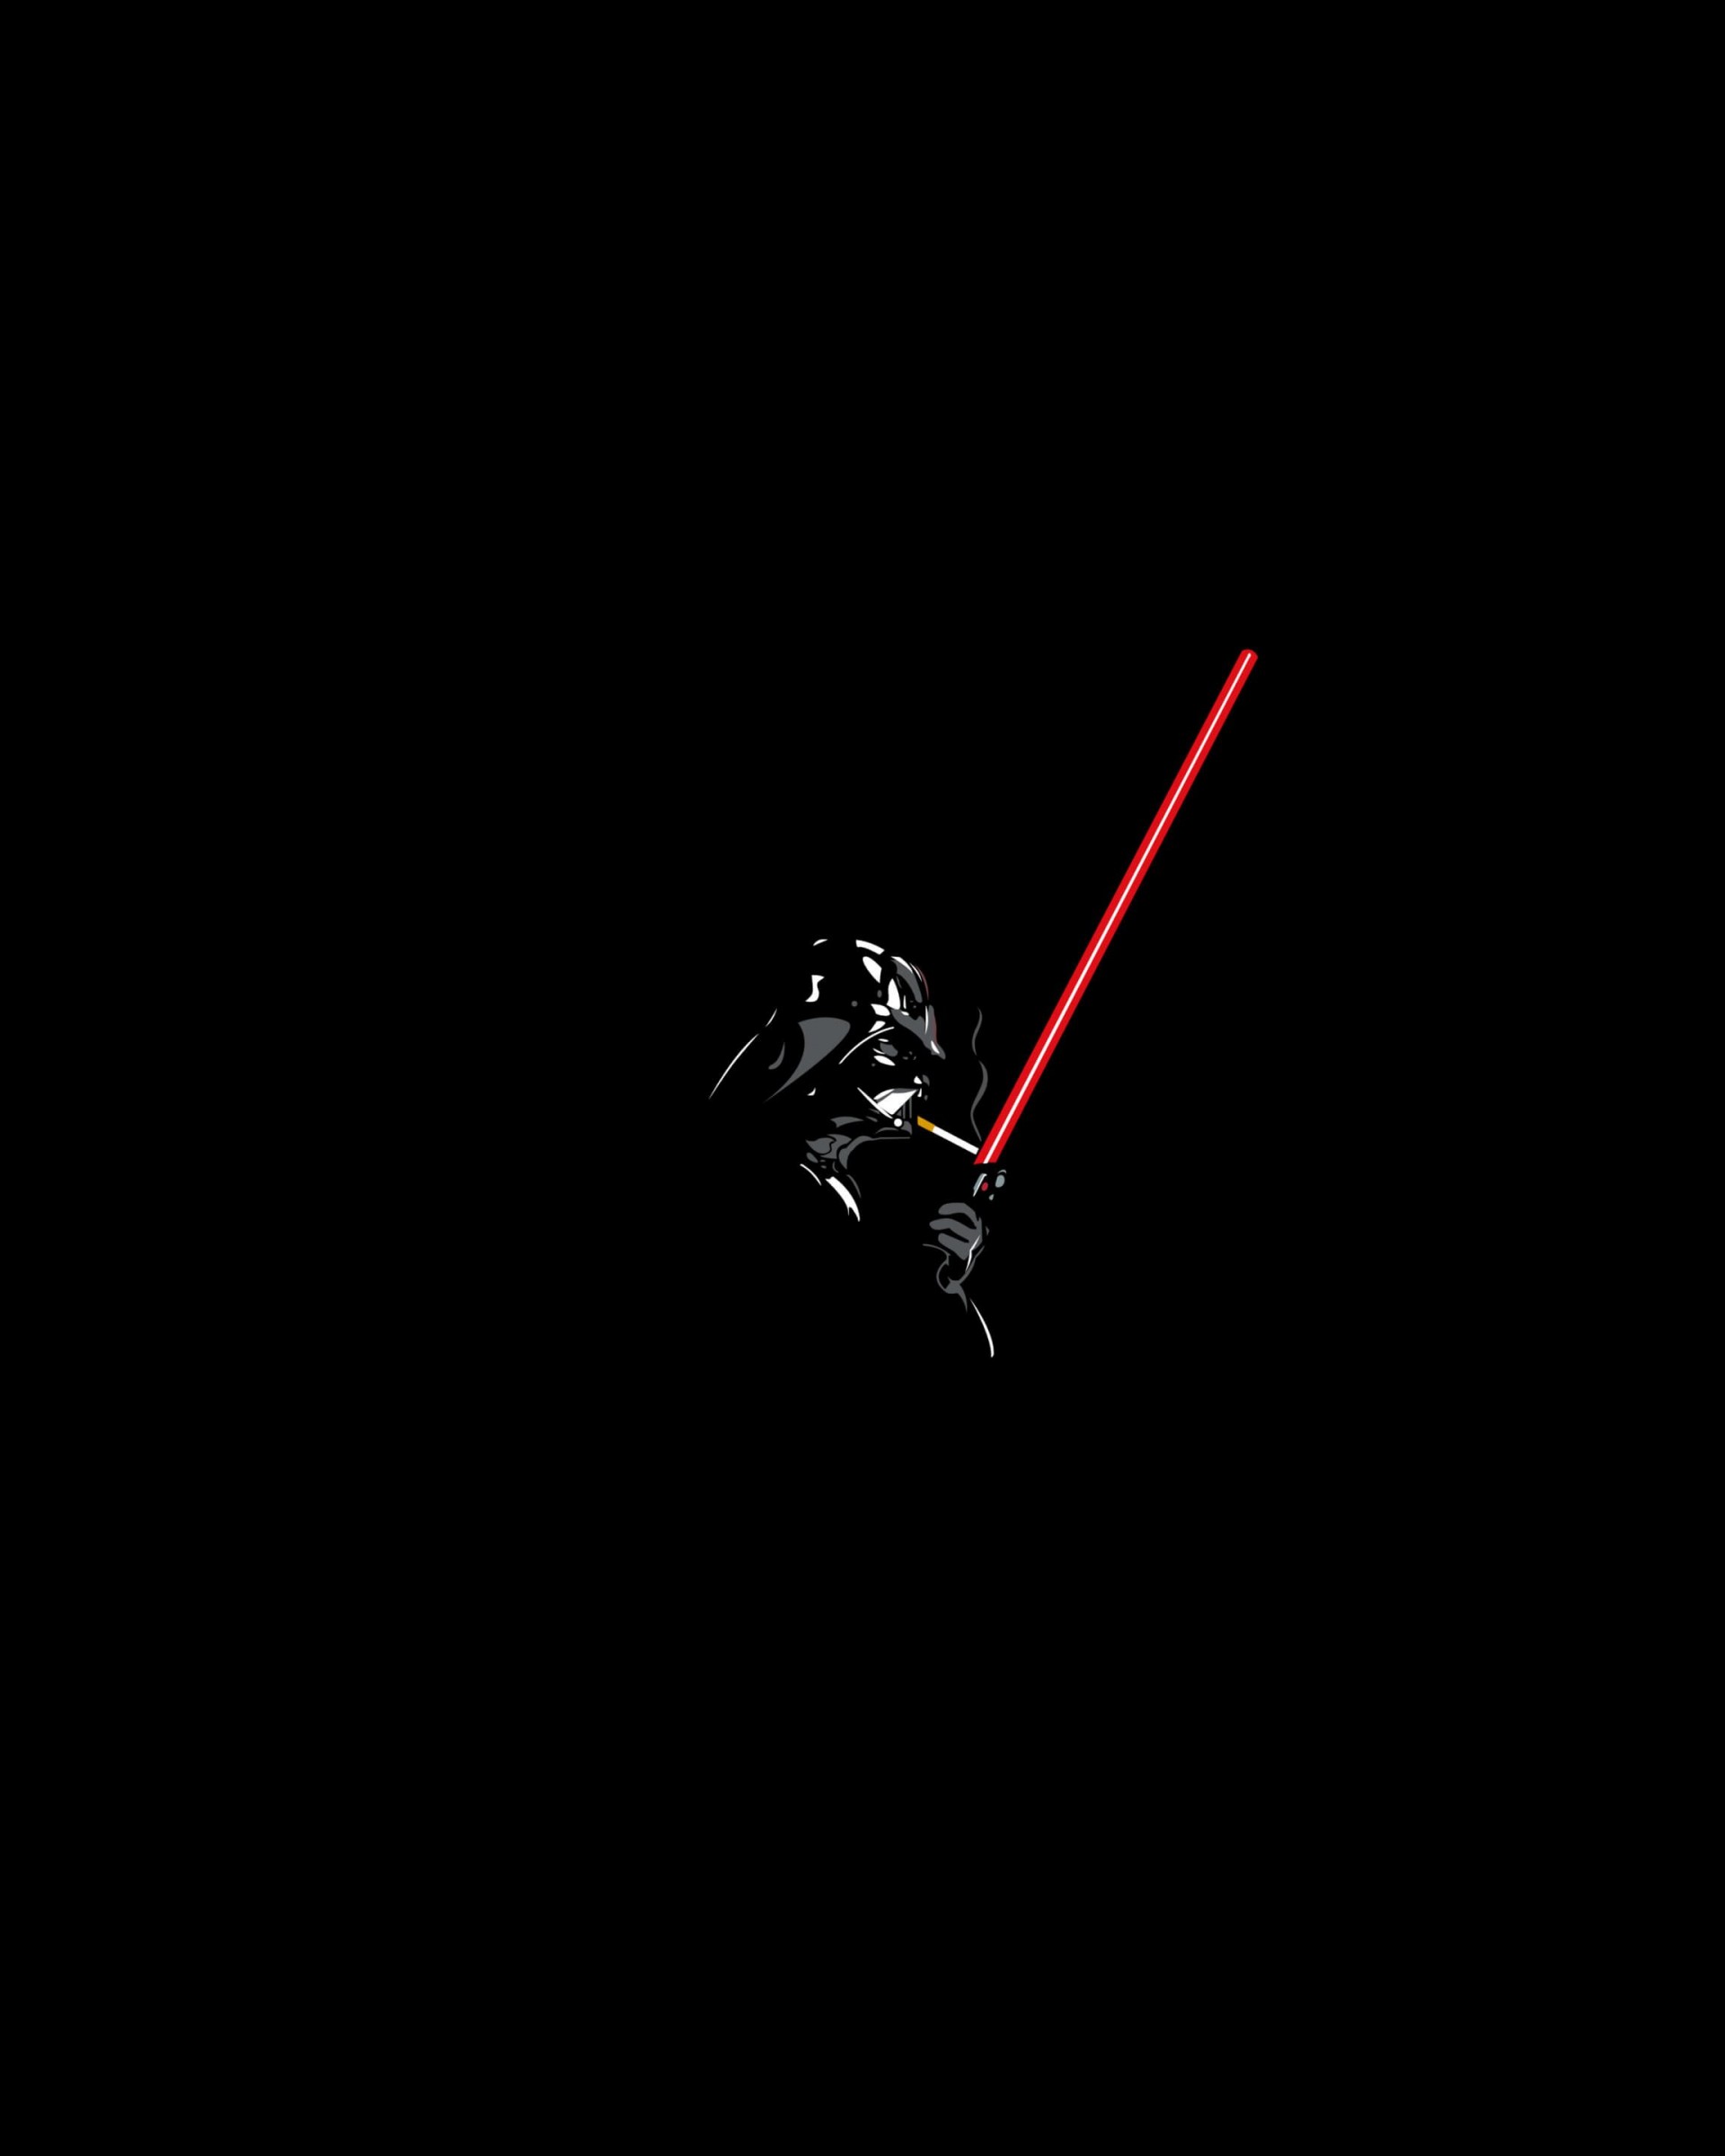 Darth Vader Lighting a Cigarette Wallpaper for Google Nexus 7